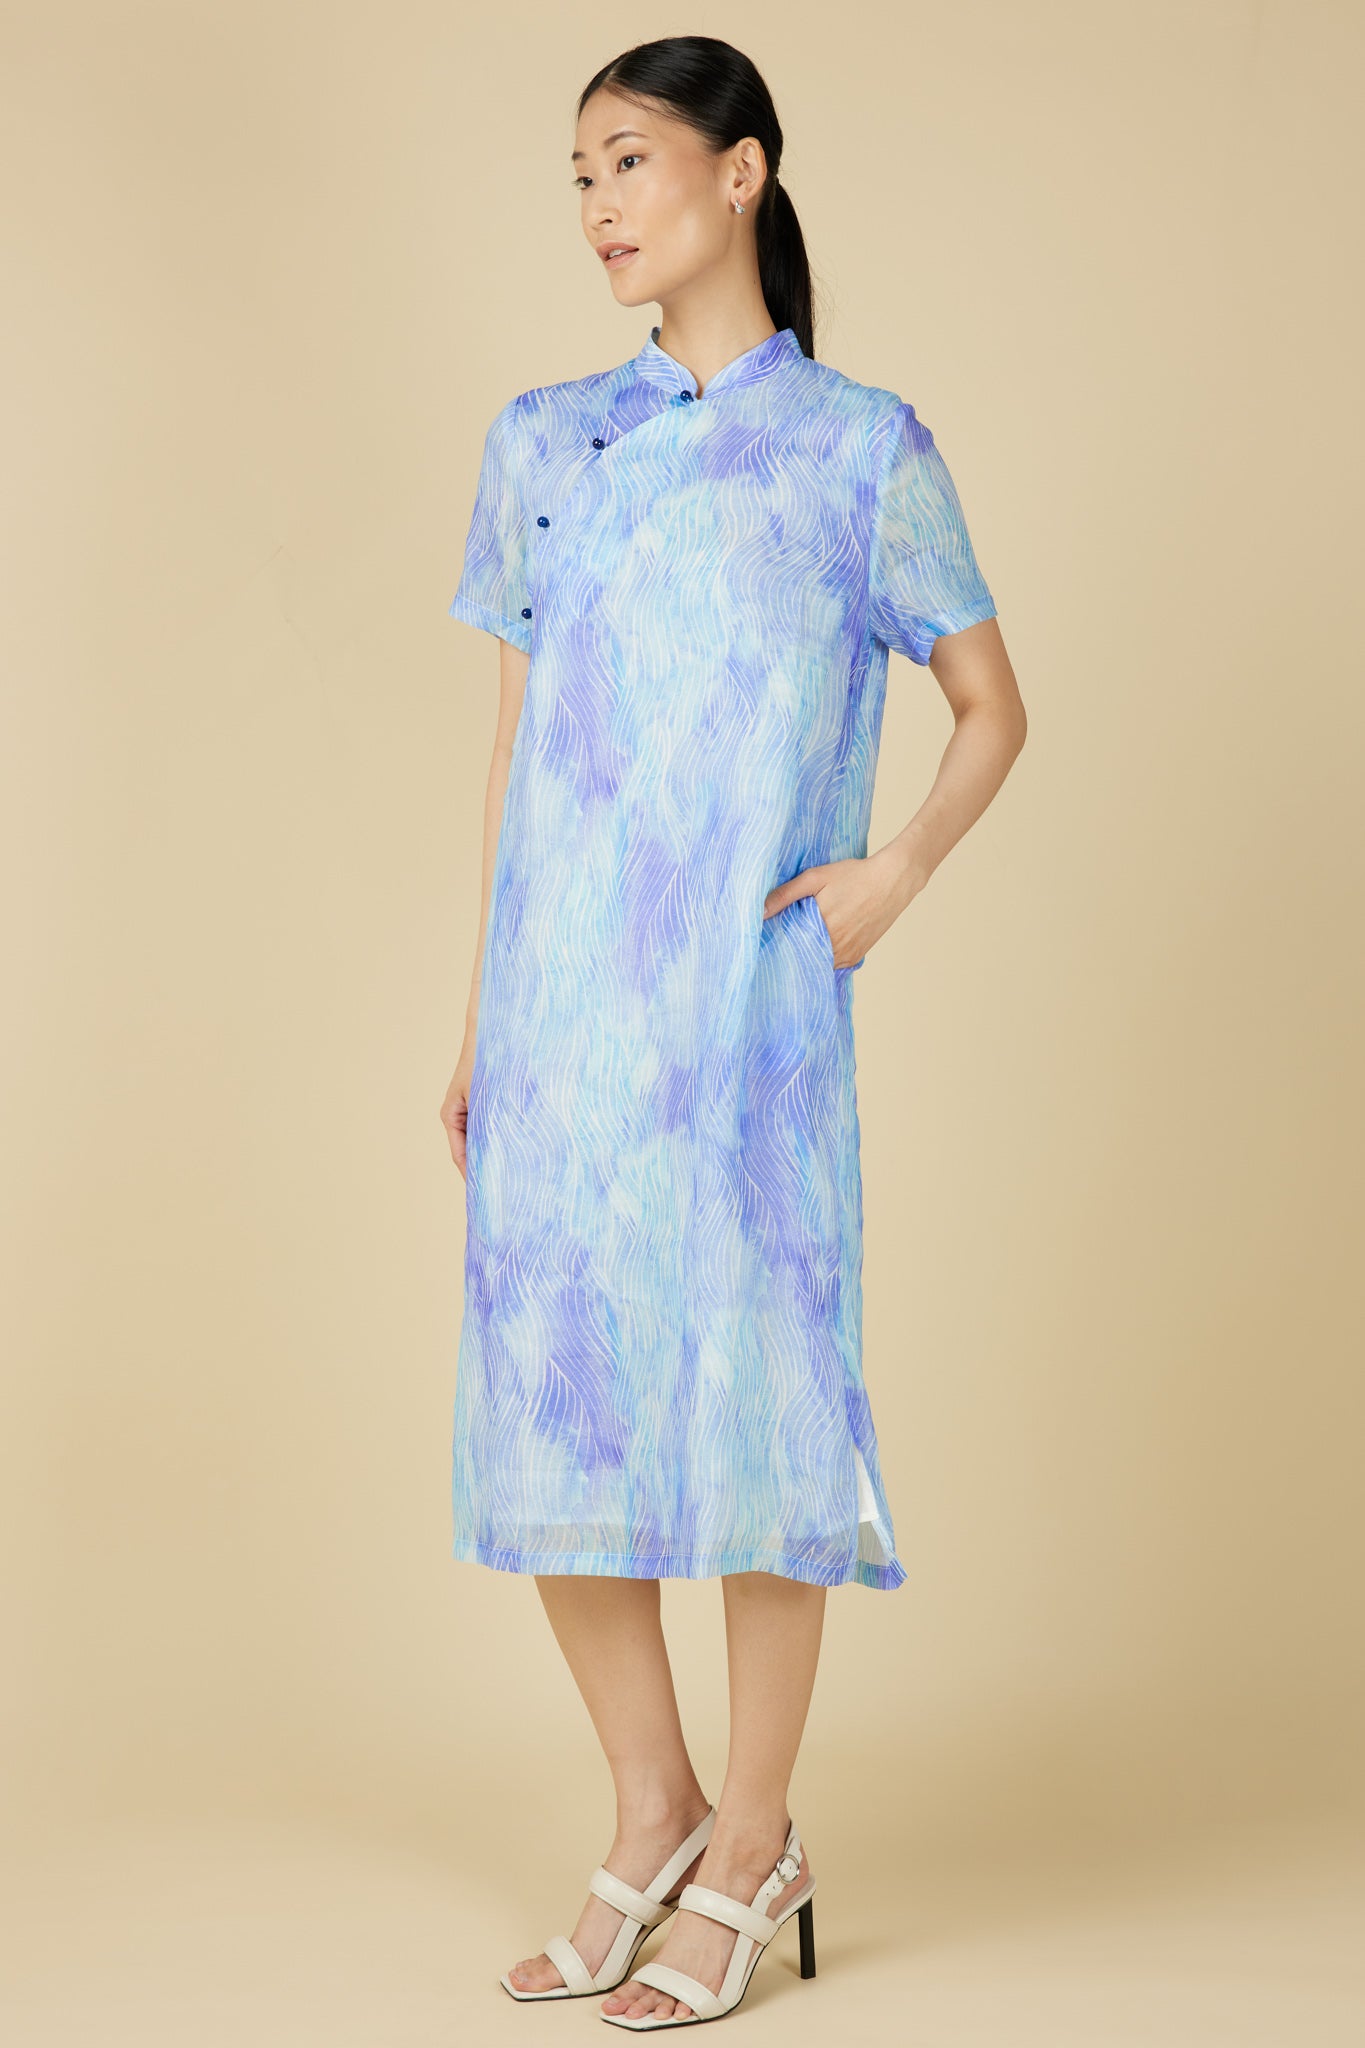 Short Sleeve Cheongsam Dress - Abstract Waves